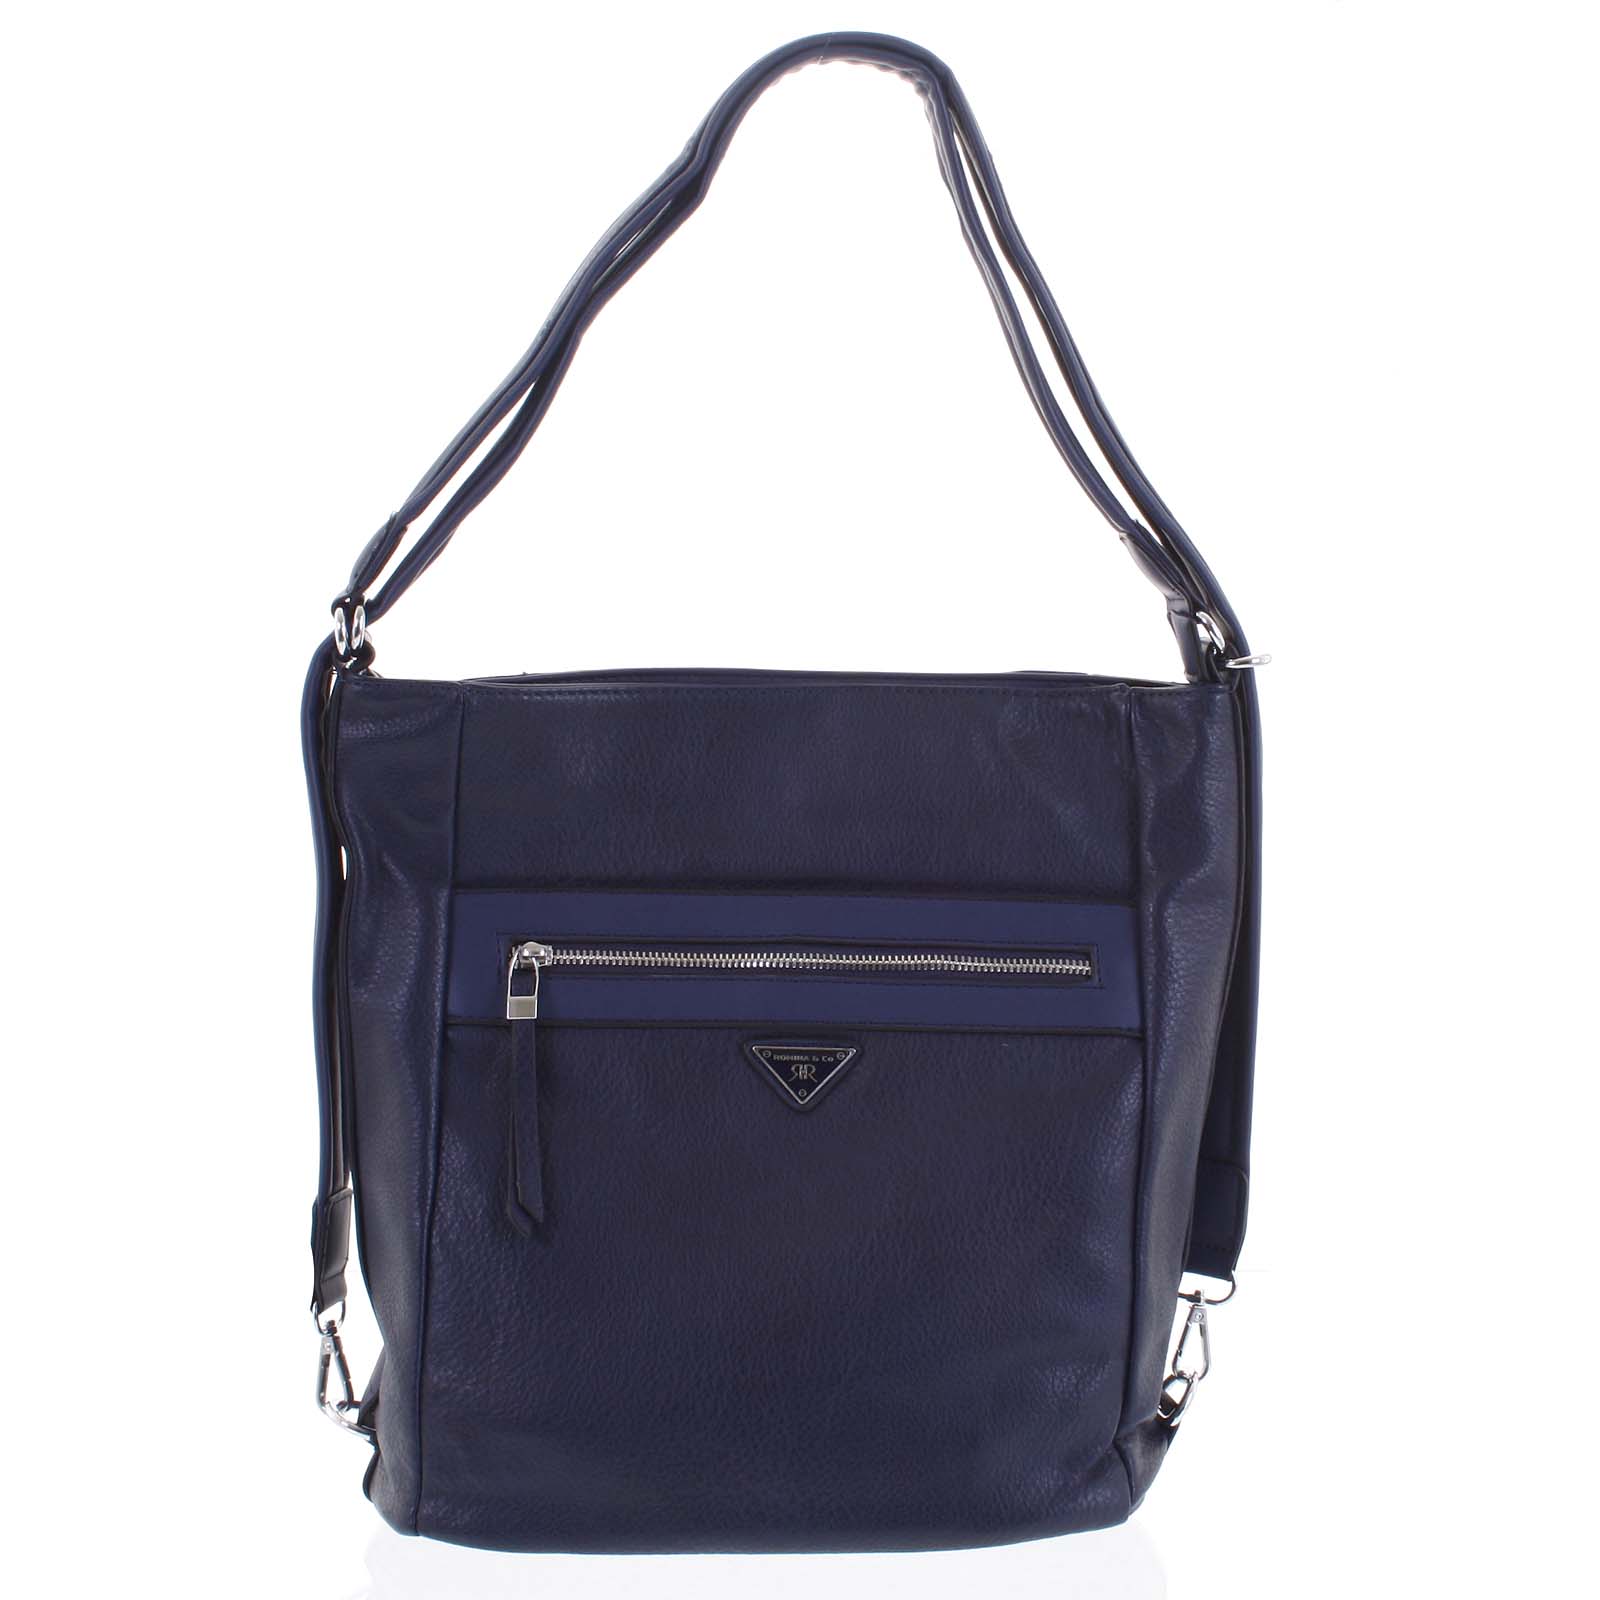 Dámská kabelka batoh tmavě modrá - Romina Tonandis tmavě modrá